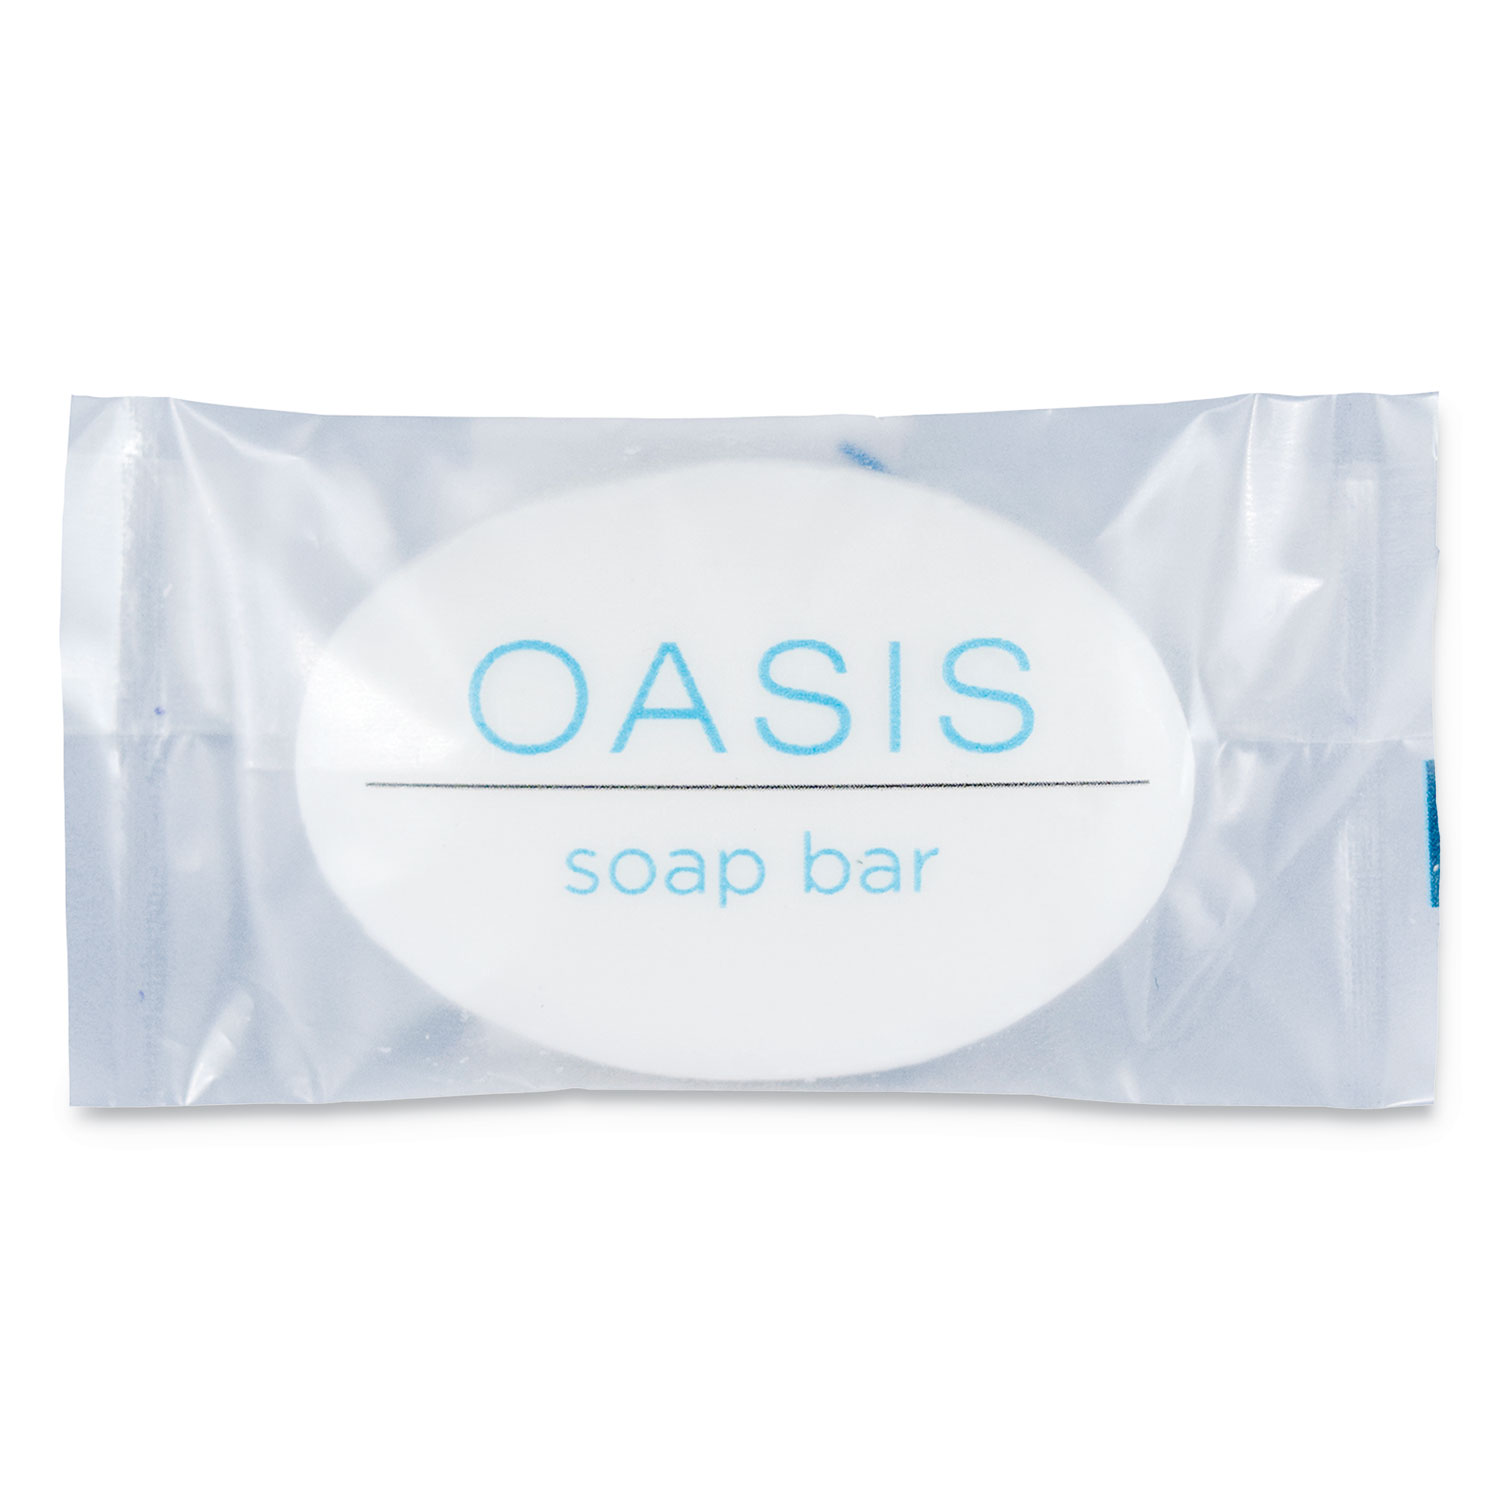  Oasis SP-OAS-10-1709 Soap Bar, Clean Scent, 0.35 oz, 1000/Carton (OGFSPOAS101709) 